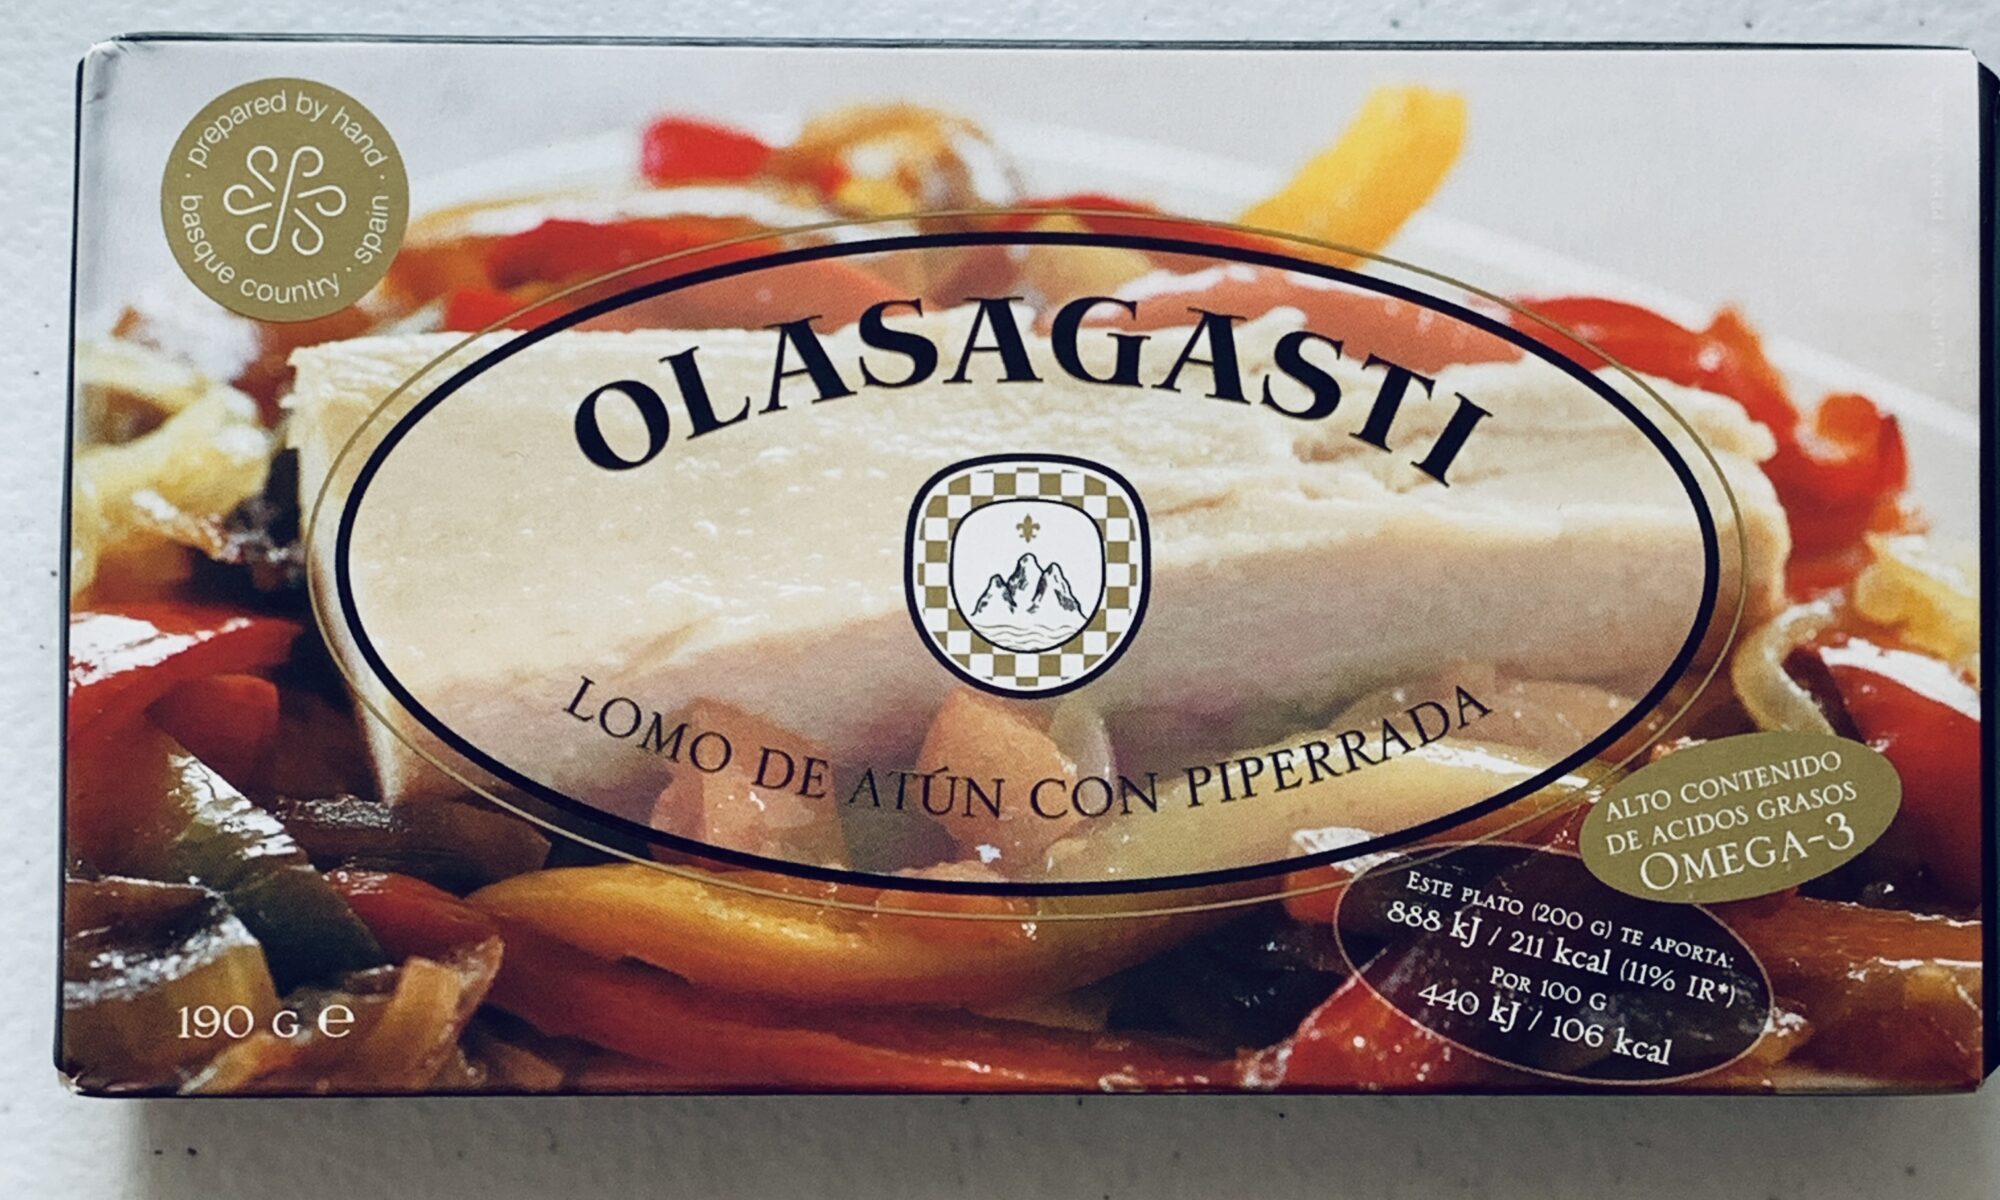 Image of the front of a package of Olasagasti Lomo de atún con piperrada (Tuna Fillet with Basque Piperade)